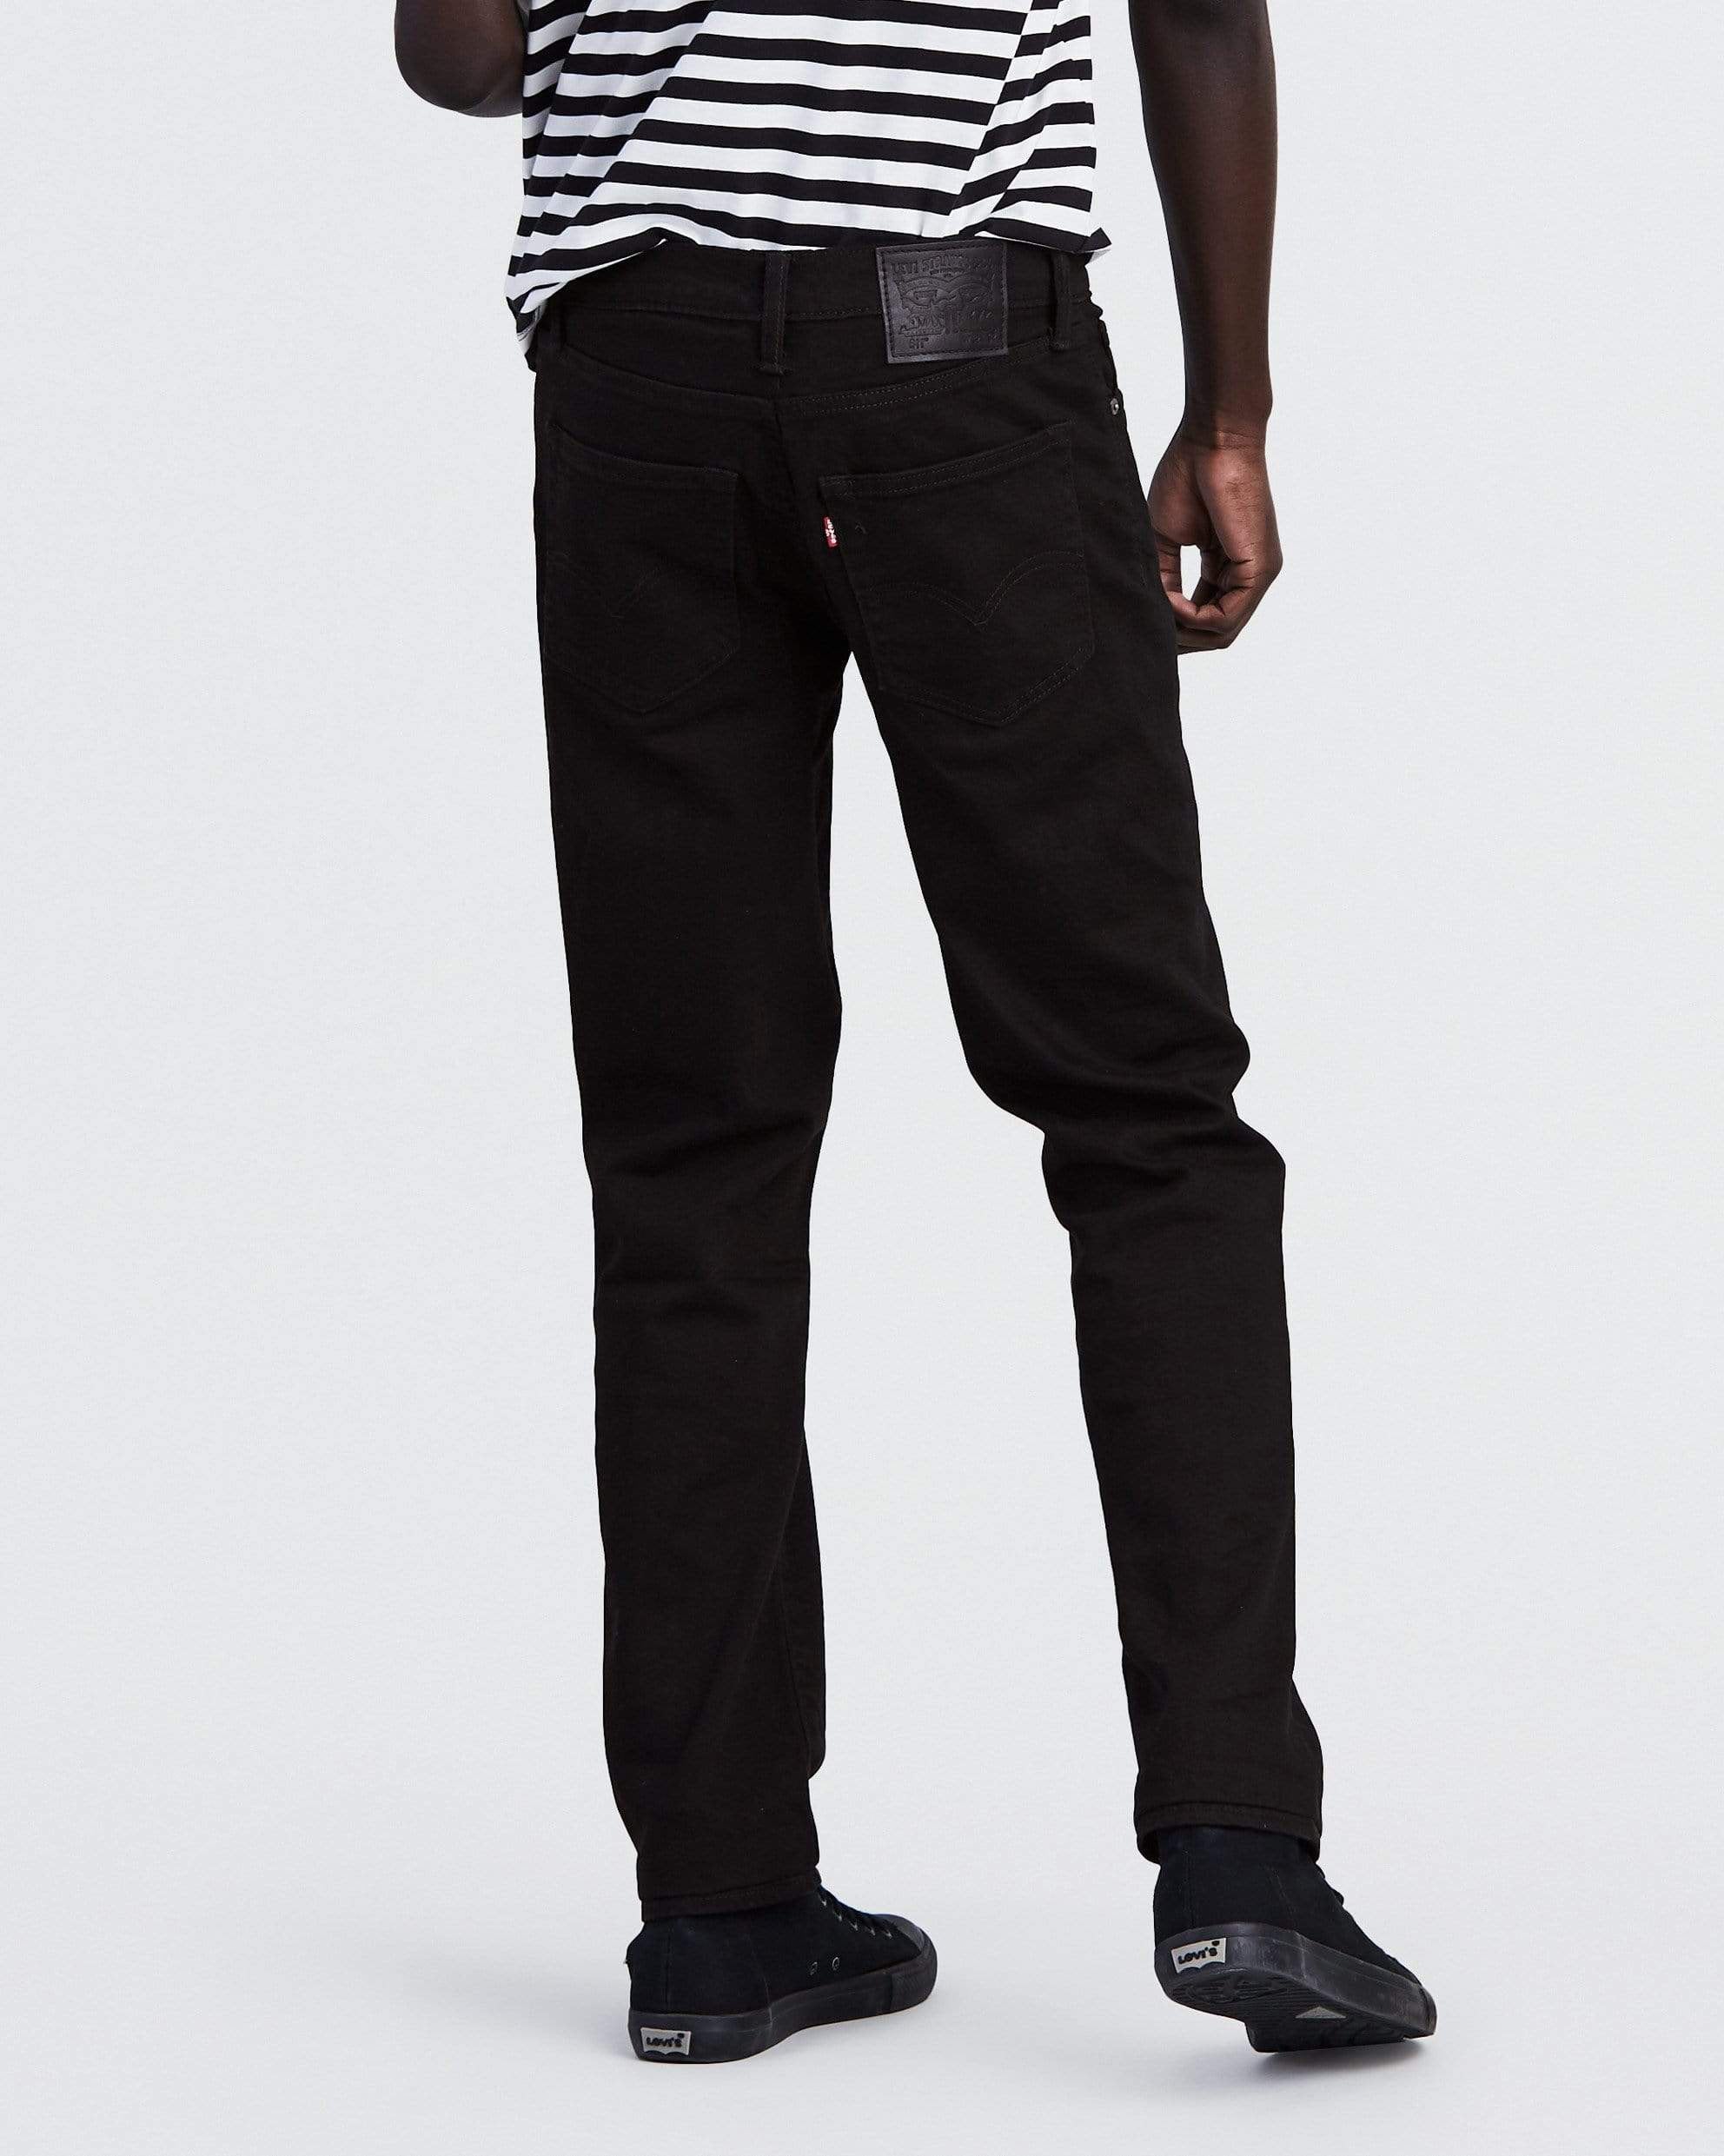 span willekeurig Oneindigheid Levis 511 Slim Fit Mens Jeans - Nightshine Black - Jeans and Street Fashion  from Jeanstore